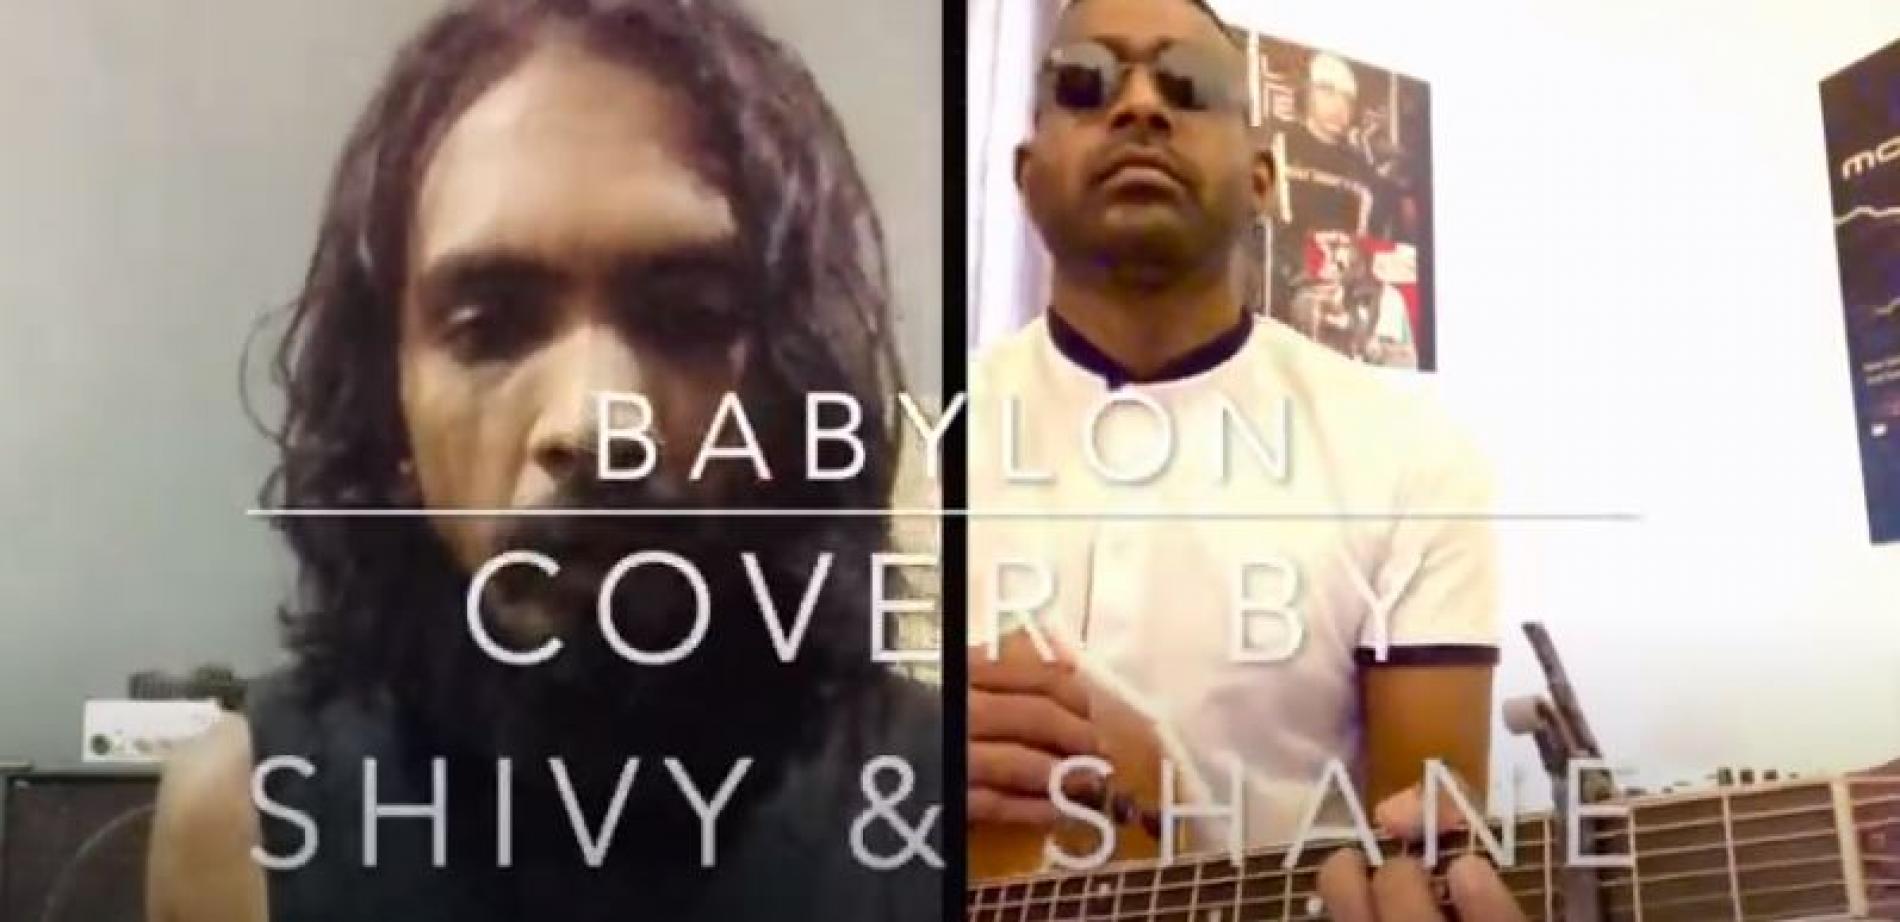 Babylon – David Gray Acoustic Cover By Shivy & Shane